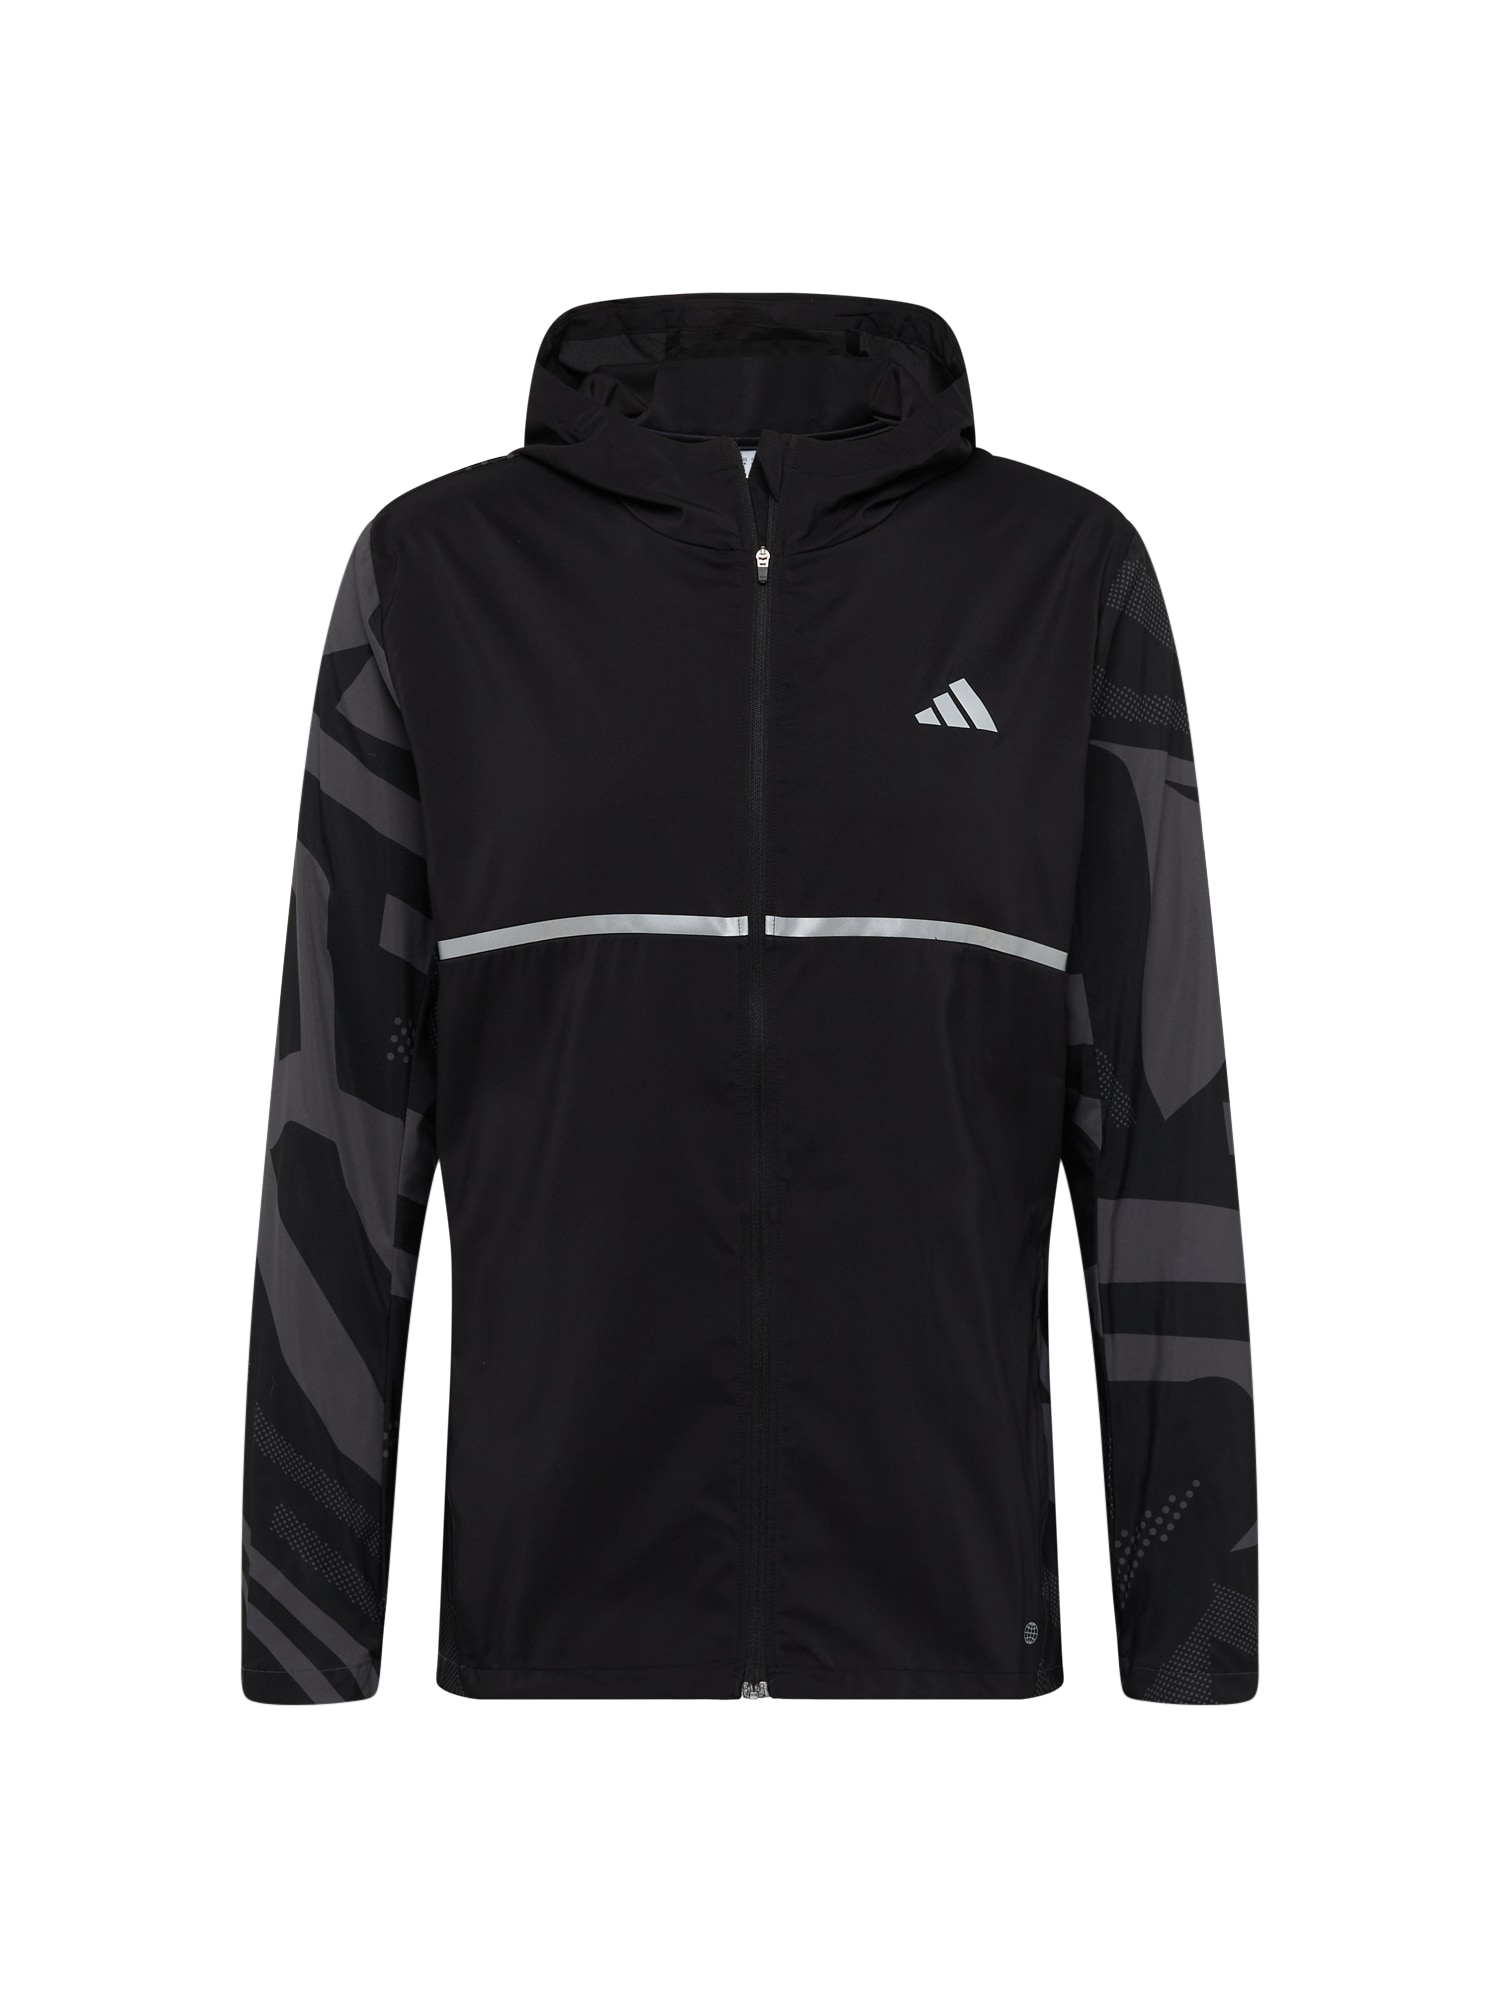 ADIDAS PERFORMANCE Športna jakna  temno siva / črna / bela